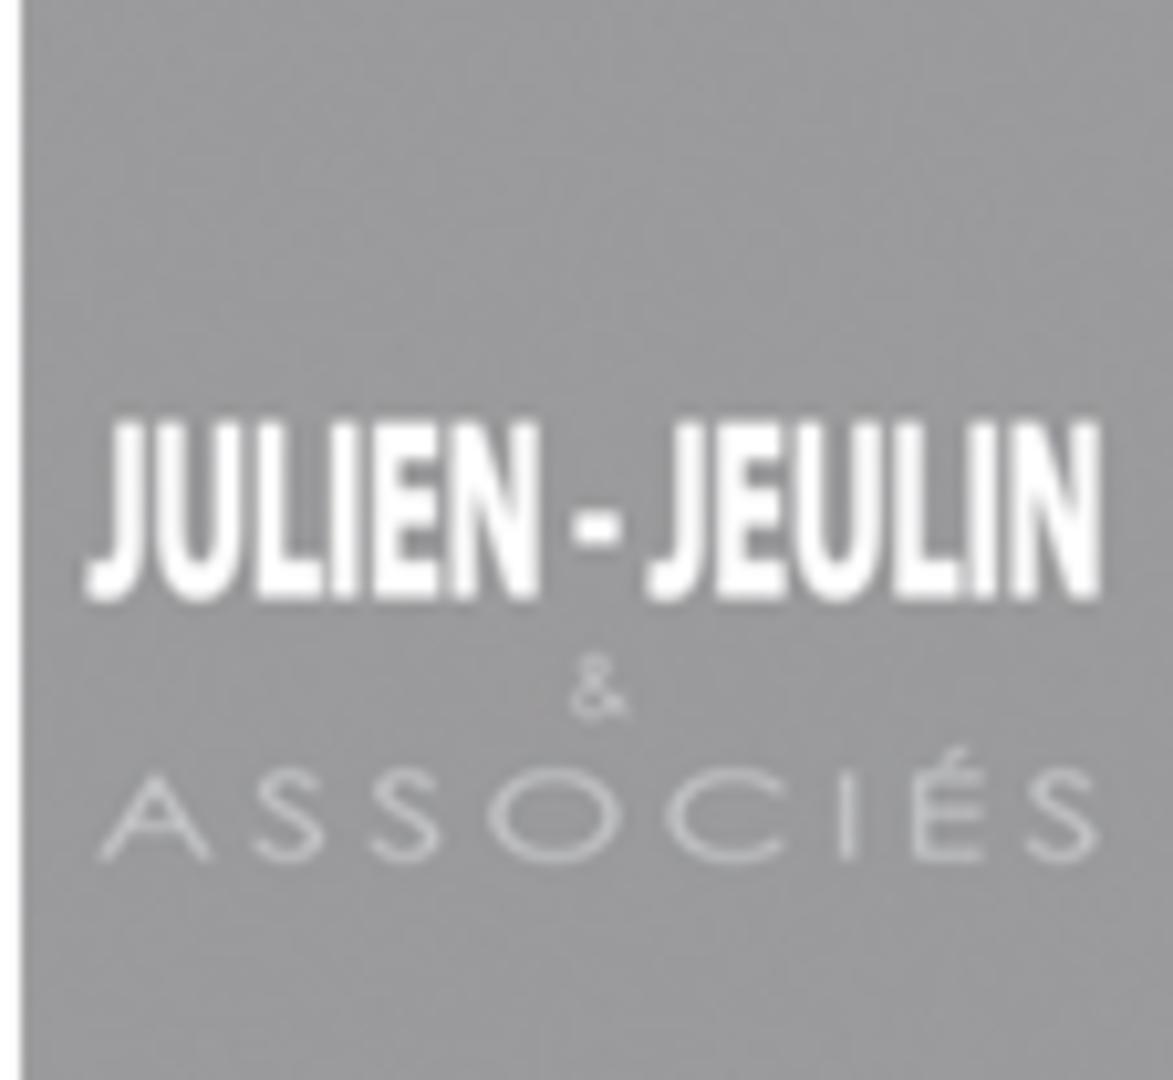 Cabinet Julien-jeulin & Associes Paris